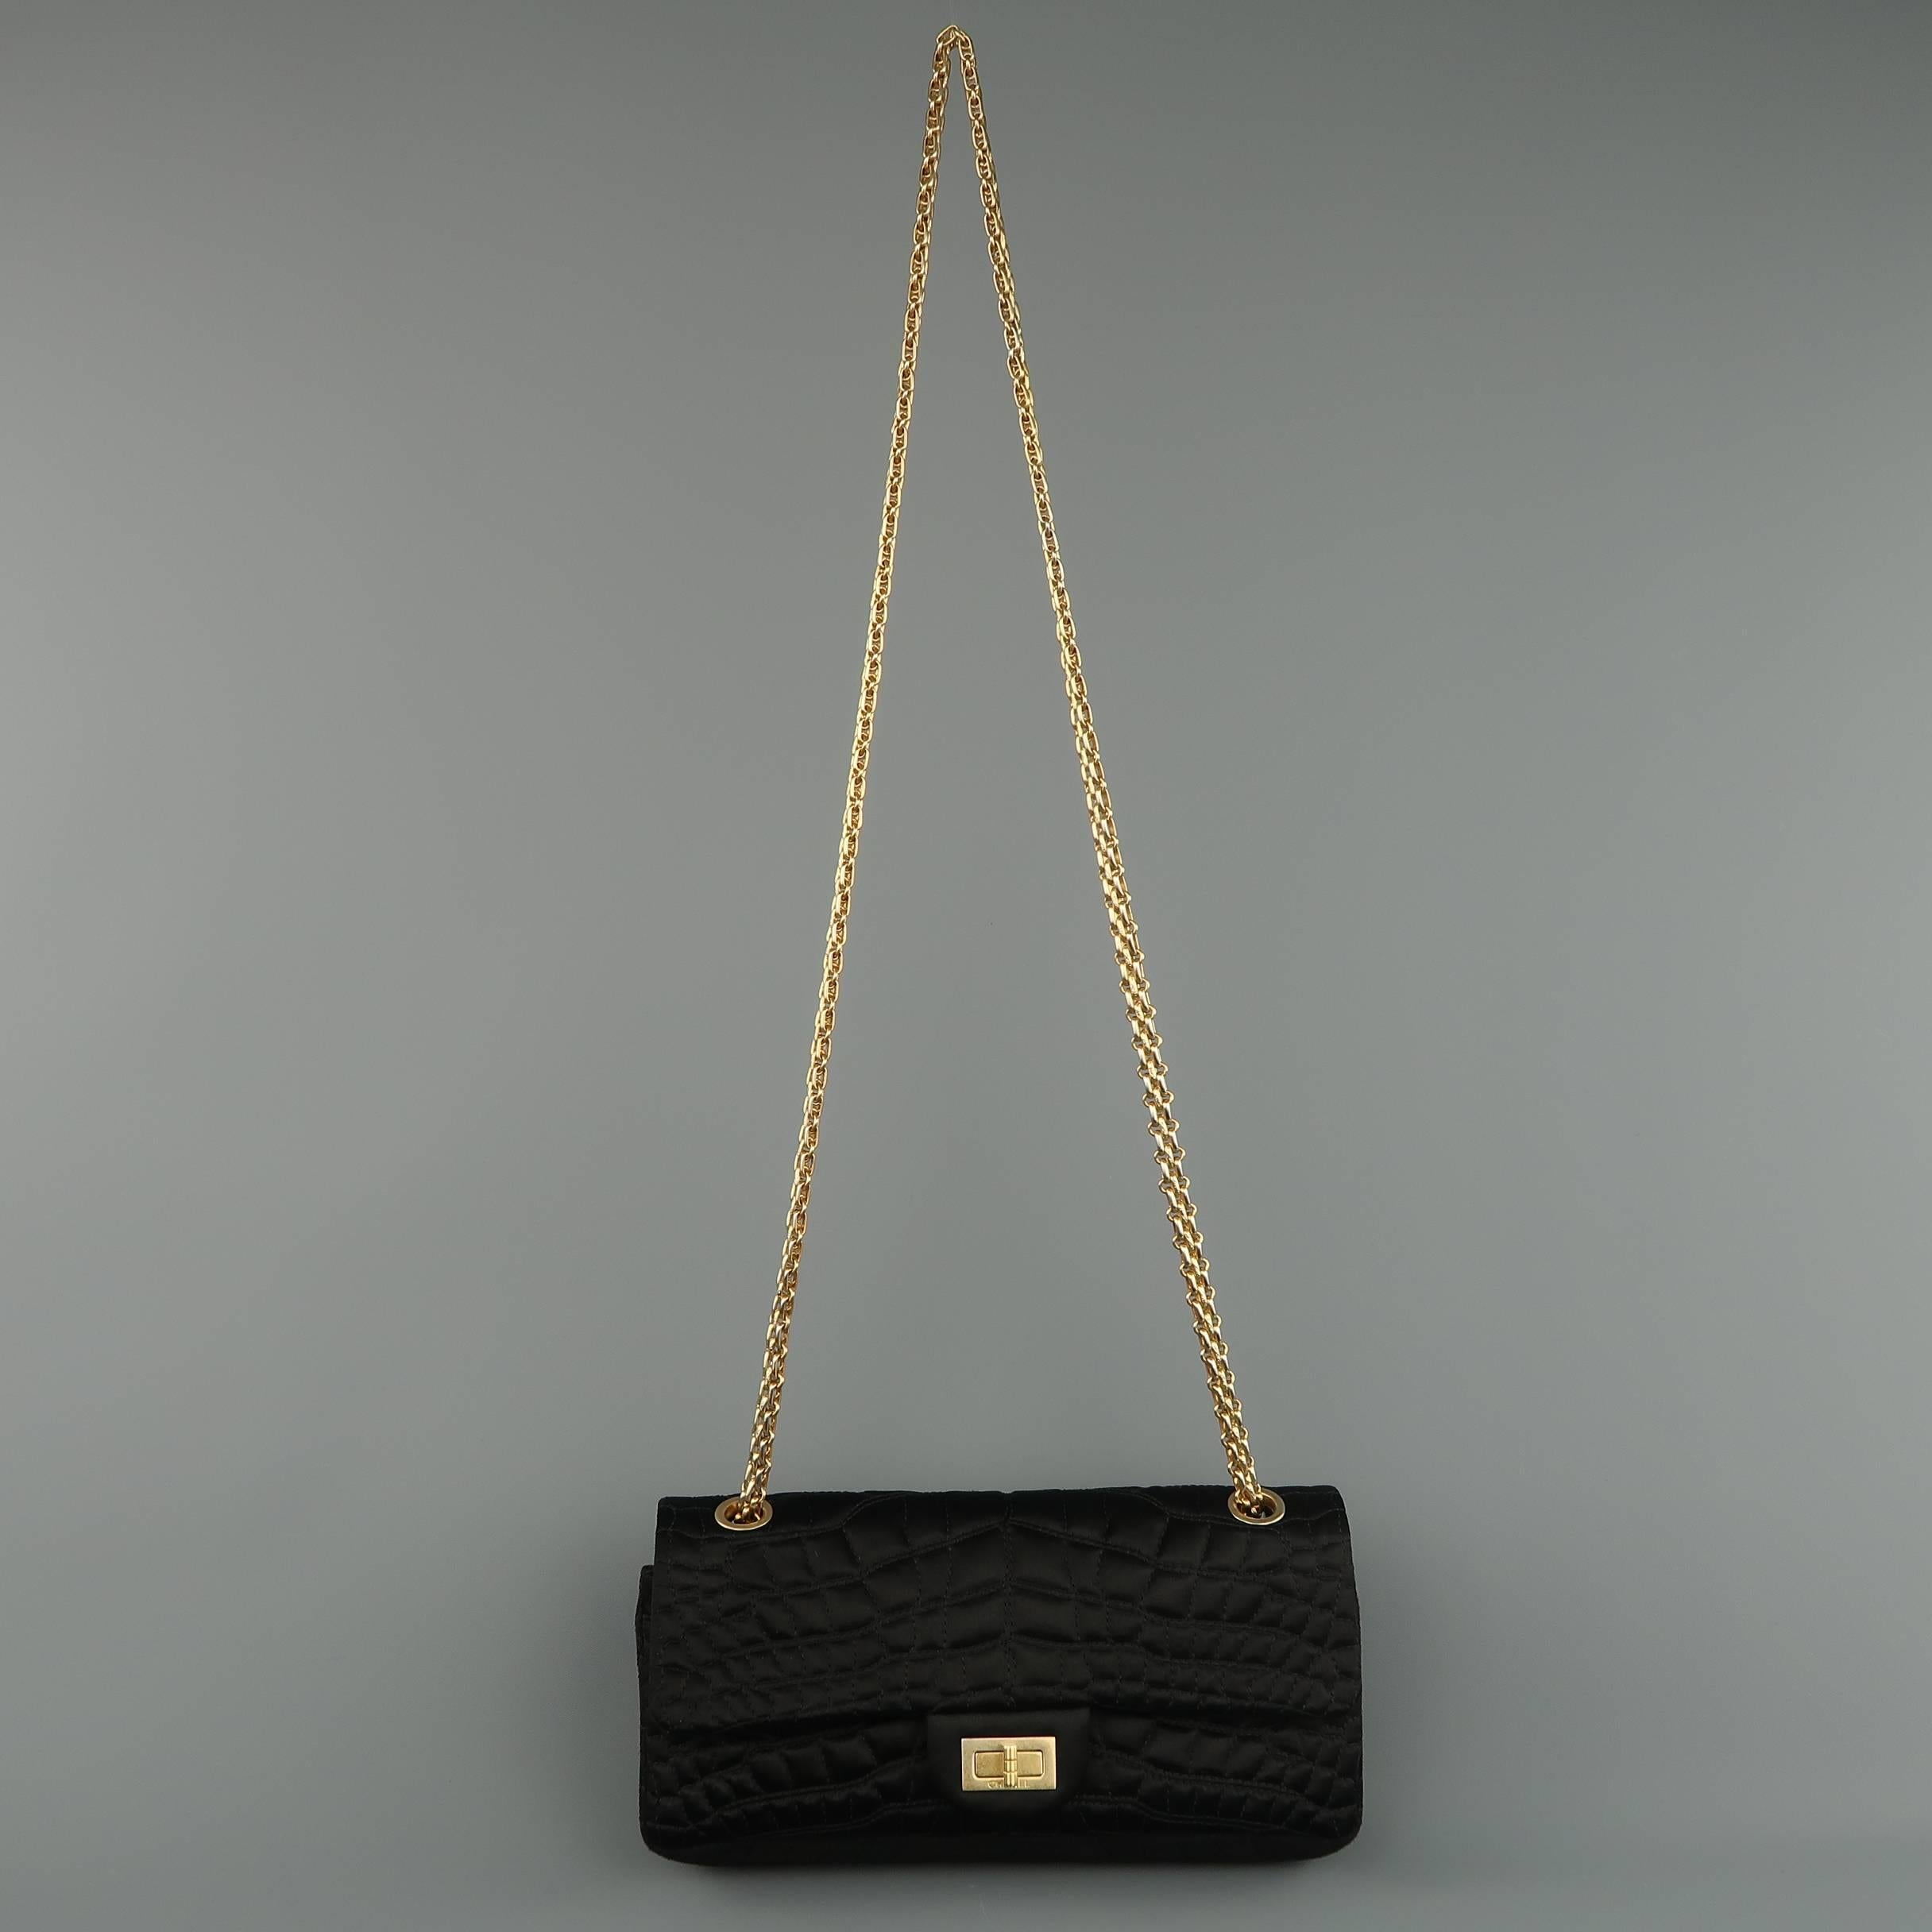 silk handbag black bag